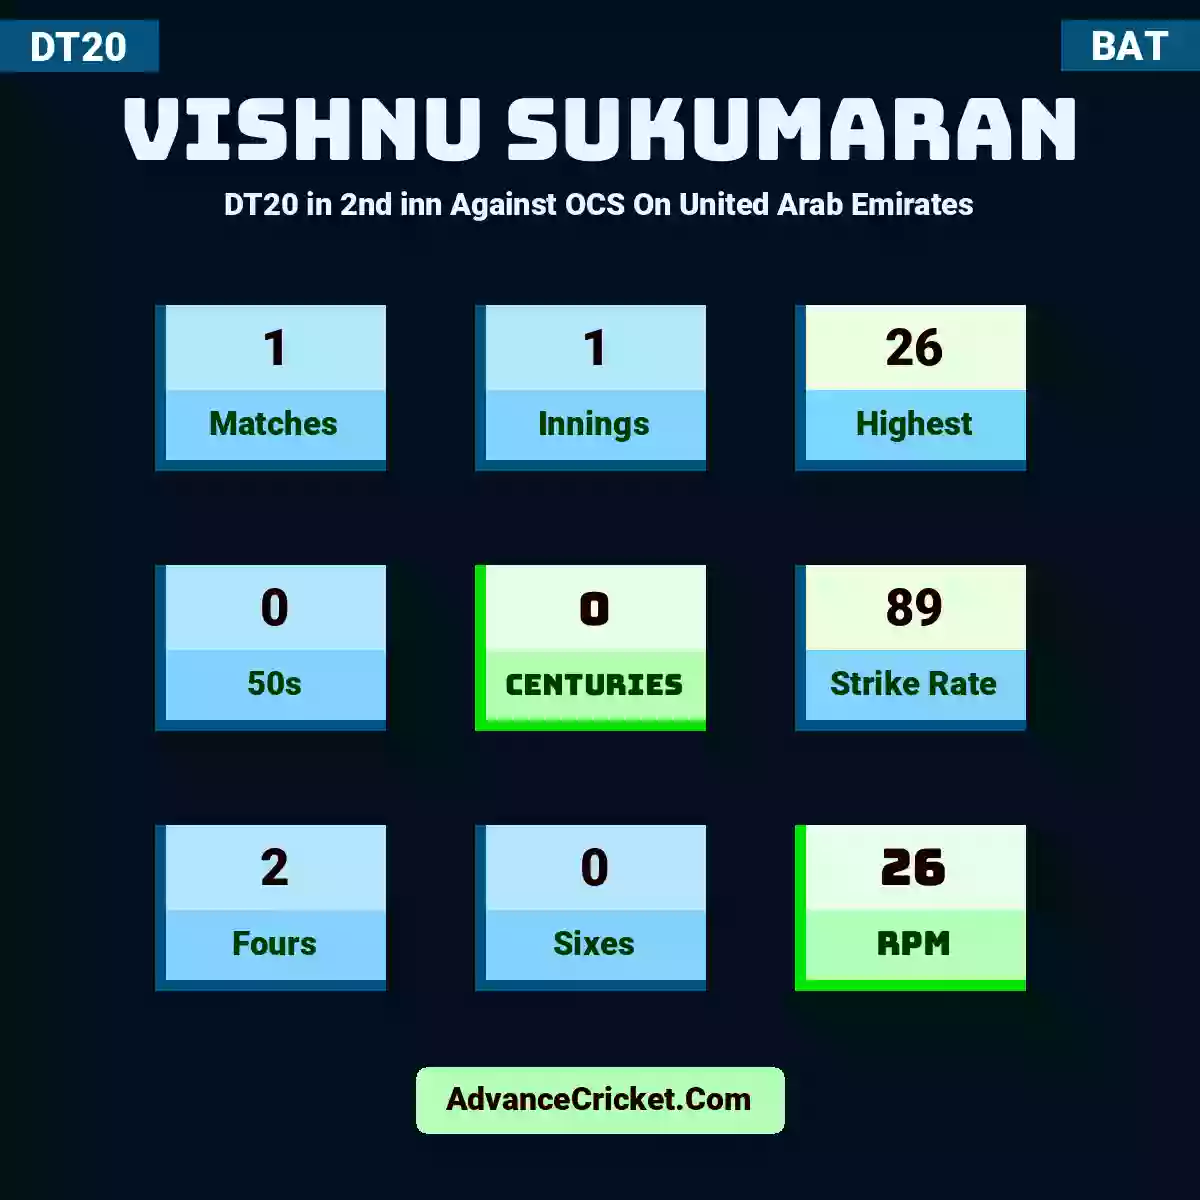 Vishnu Sukumaran DT20  in 2nd inn Against OCS On United Arab Emirates, Vishnu Sukumaran played 1 matches, scored 26 runs as highest, 0 half-centuries, and 0 centuries, with a strike rate of 89. V.Sukumaran hit 2 fours and 0 sixes, with an RPM of 26.